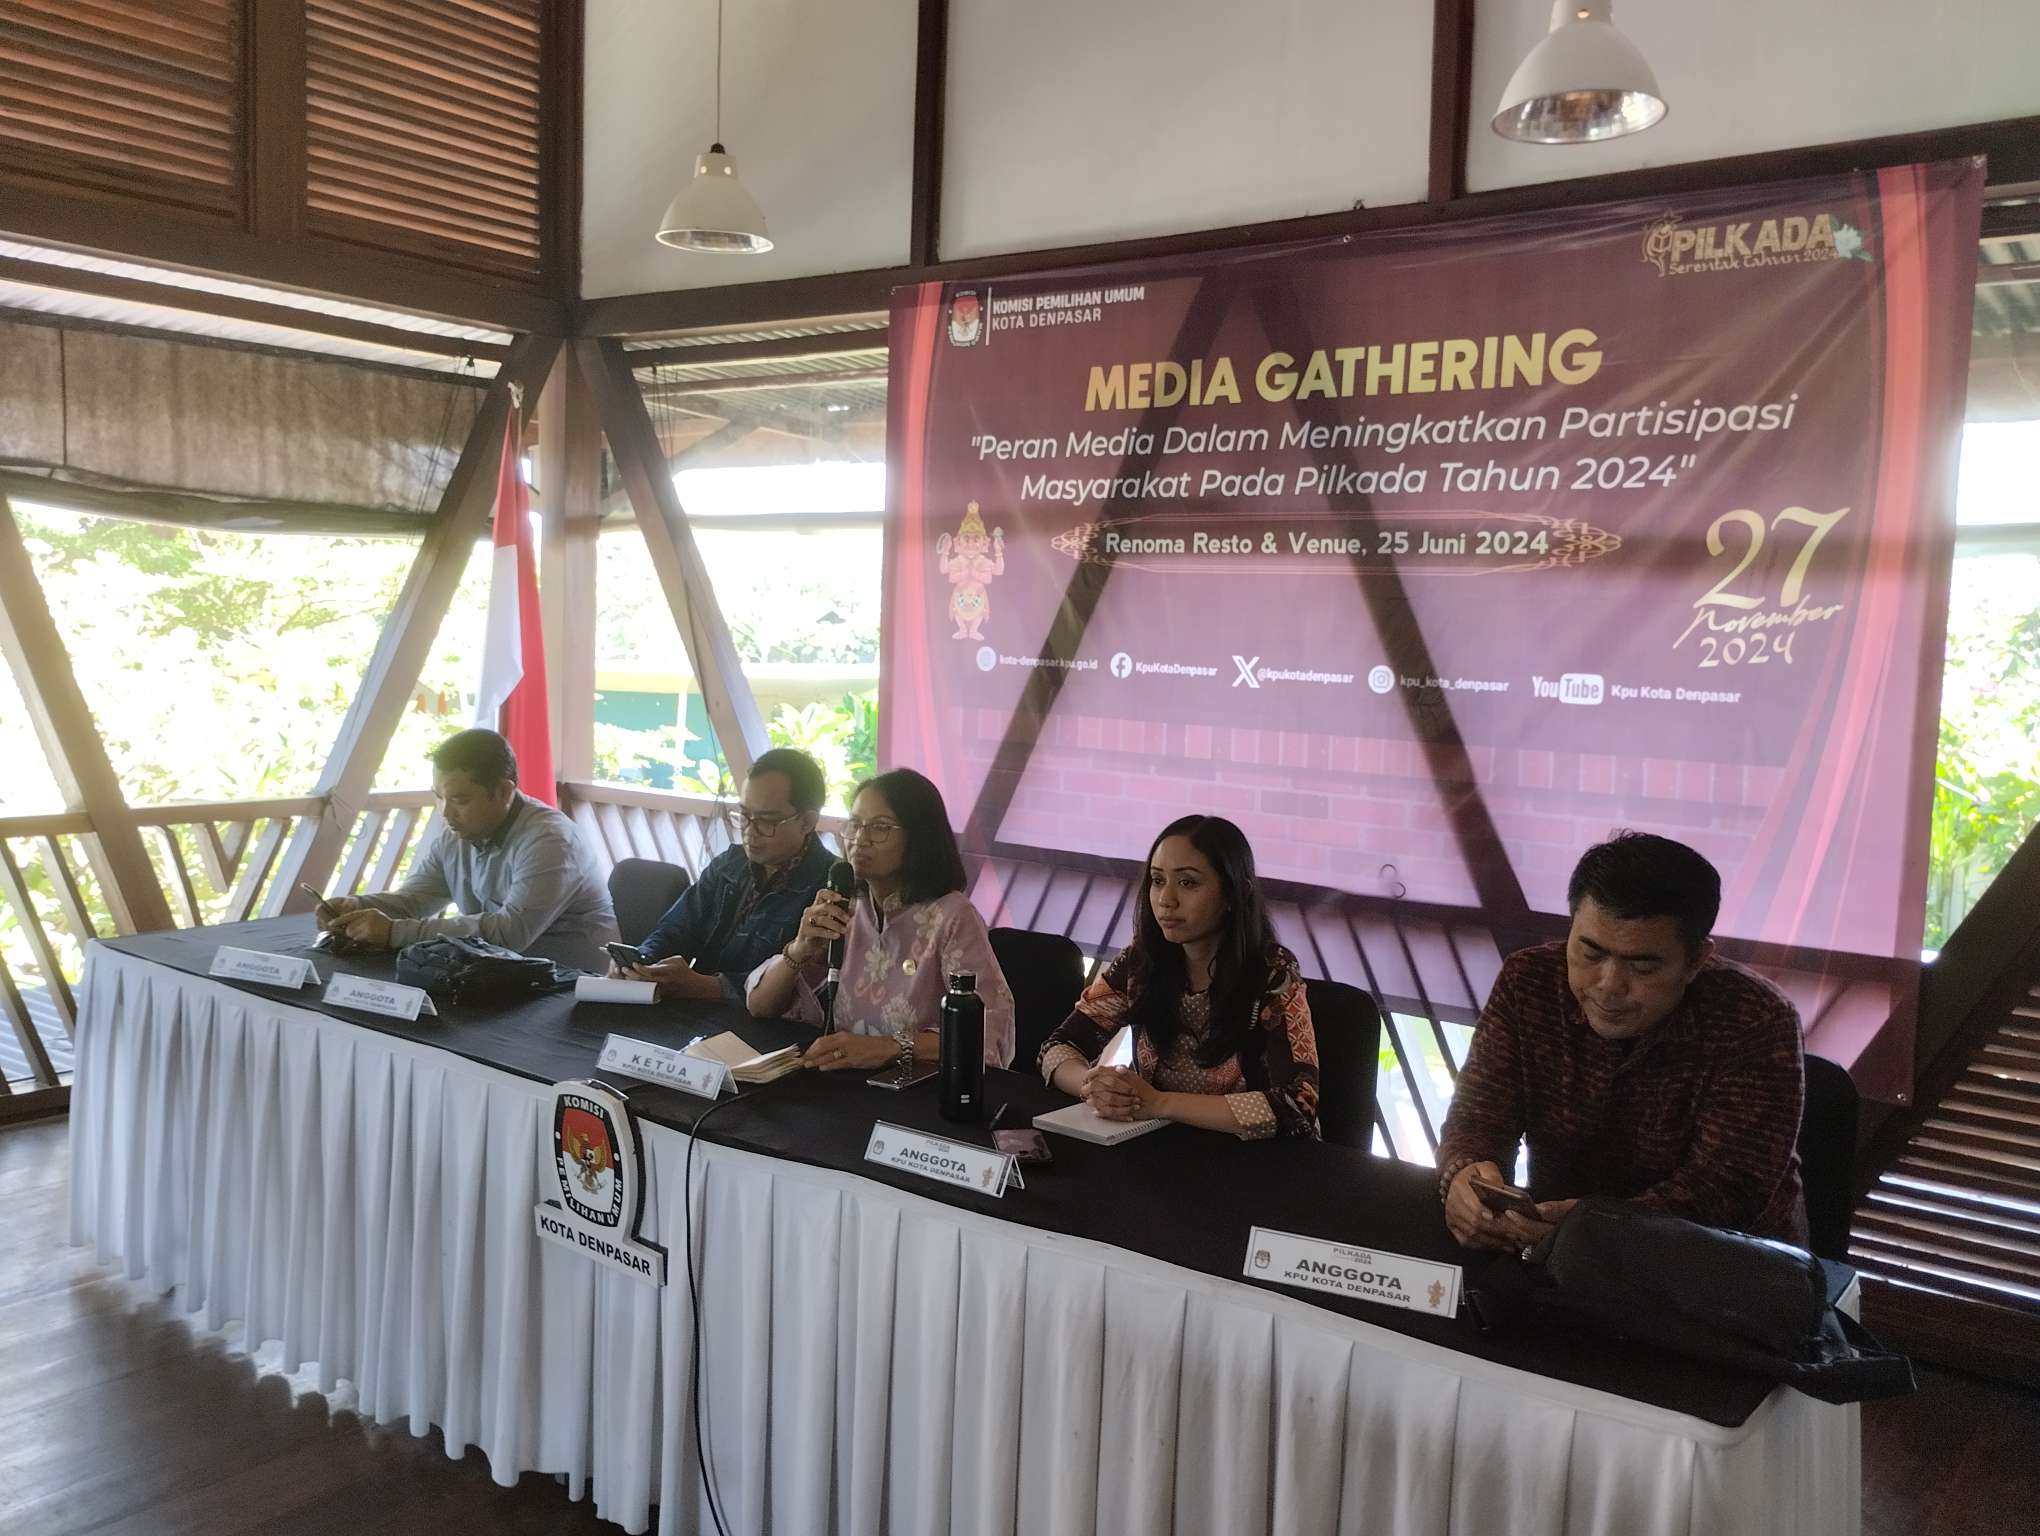 KPU Denpasar Ajak Media Dorong Peningkatan Partisipasi Publik di Pilkada Serentak 2024